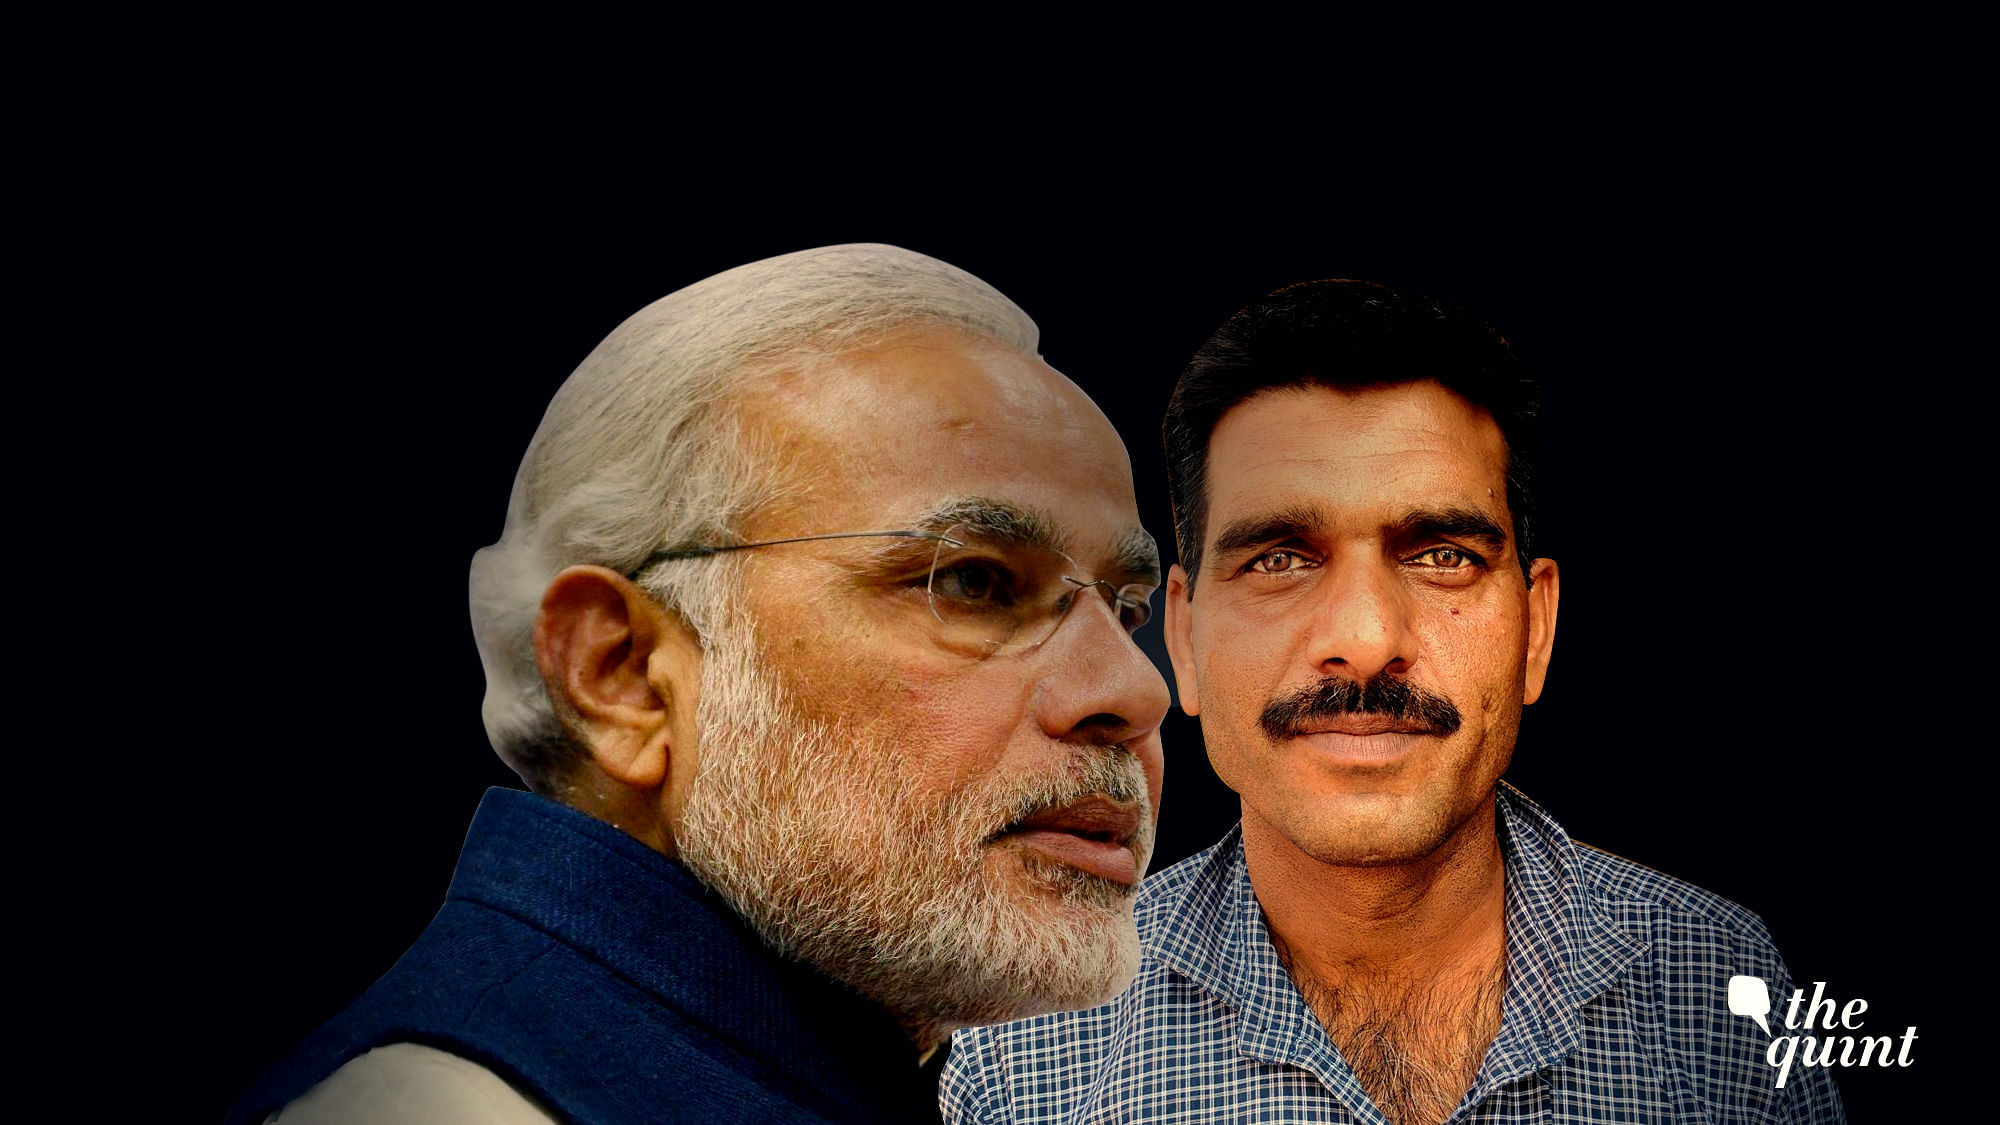 Image of PM Modi and ex-BSF jawan Tej Bahadur Yadav, used for representational purposes.